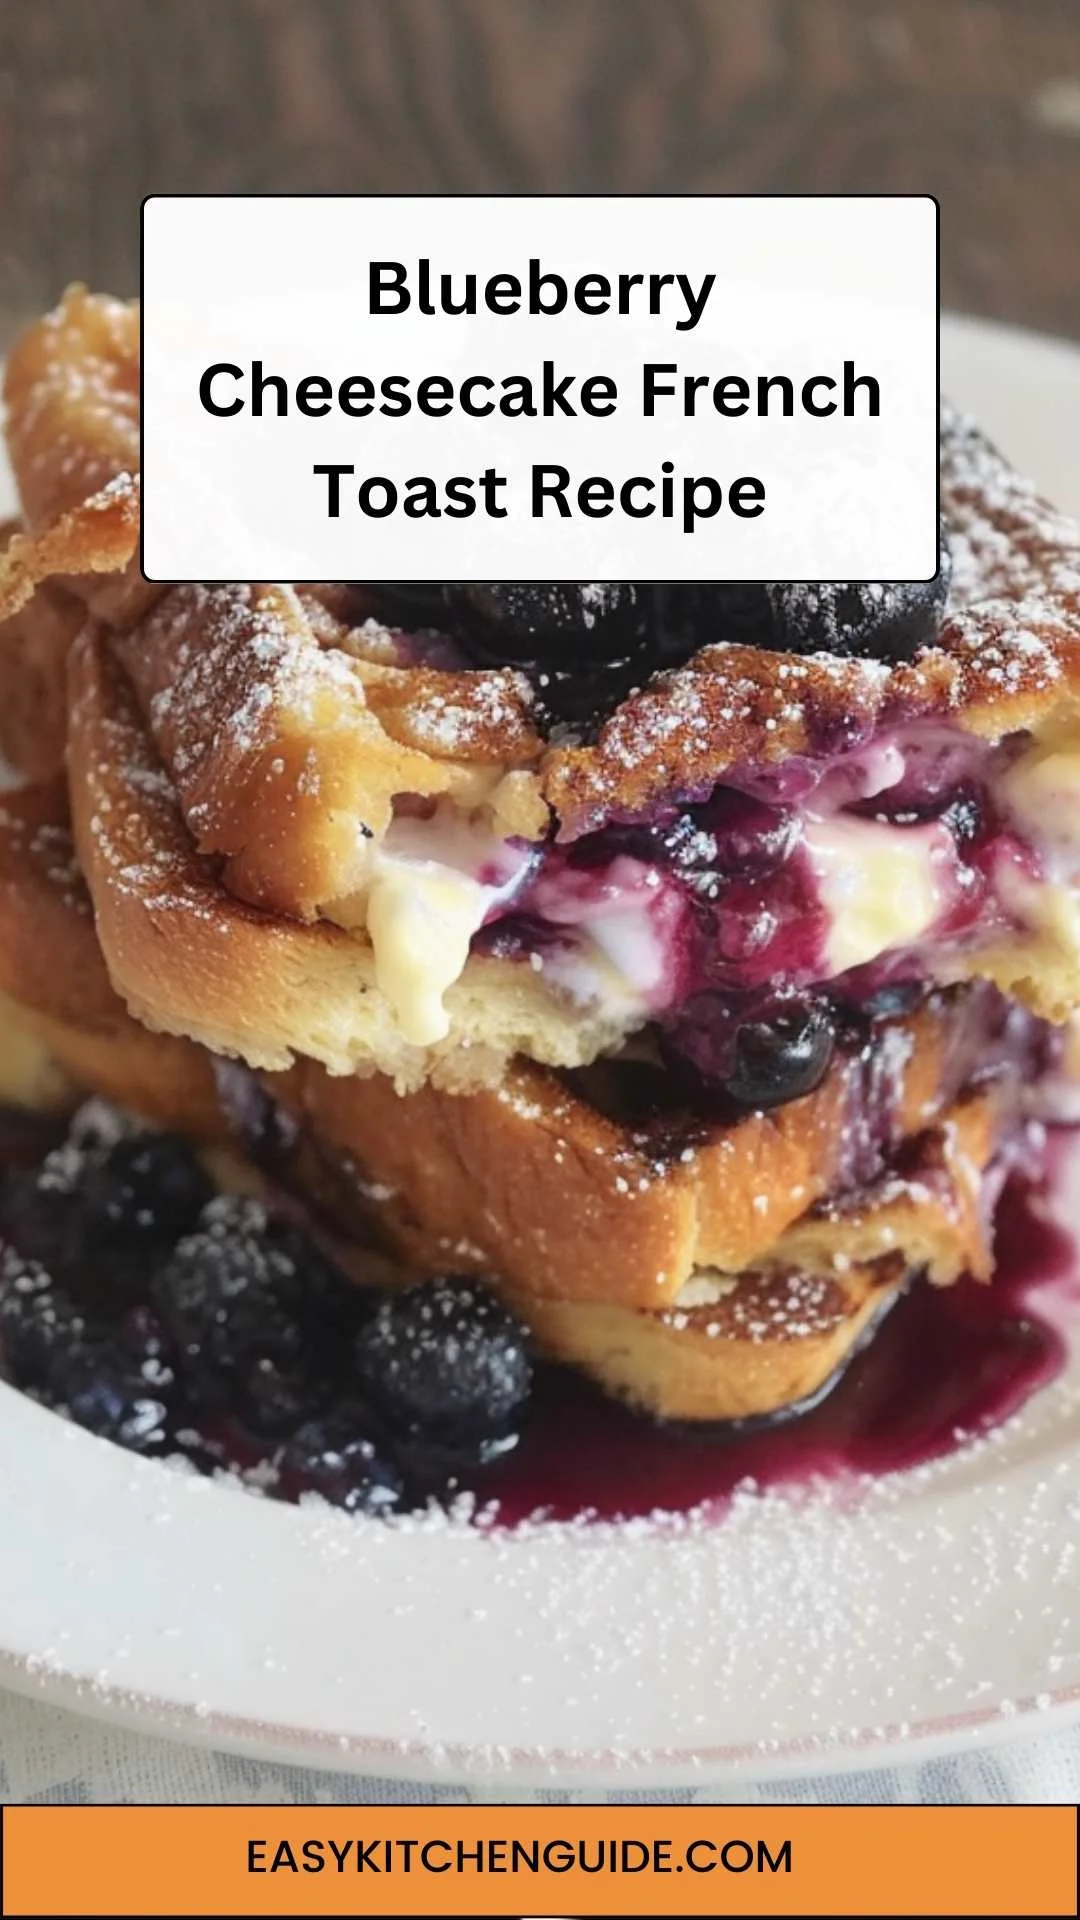 Blueberry Cheesecake French Toast Recipe